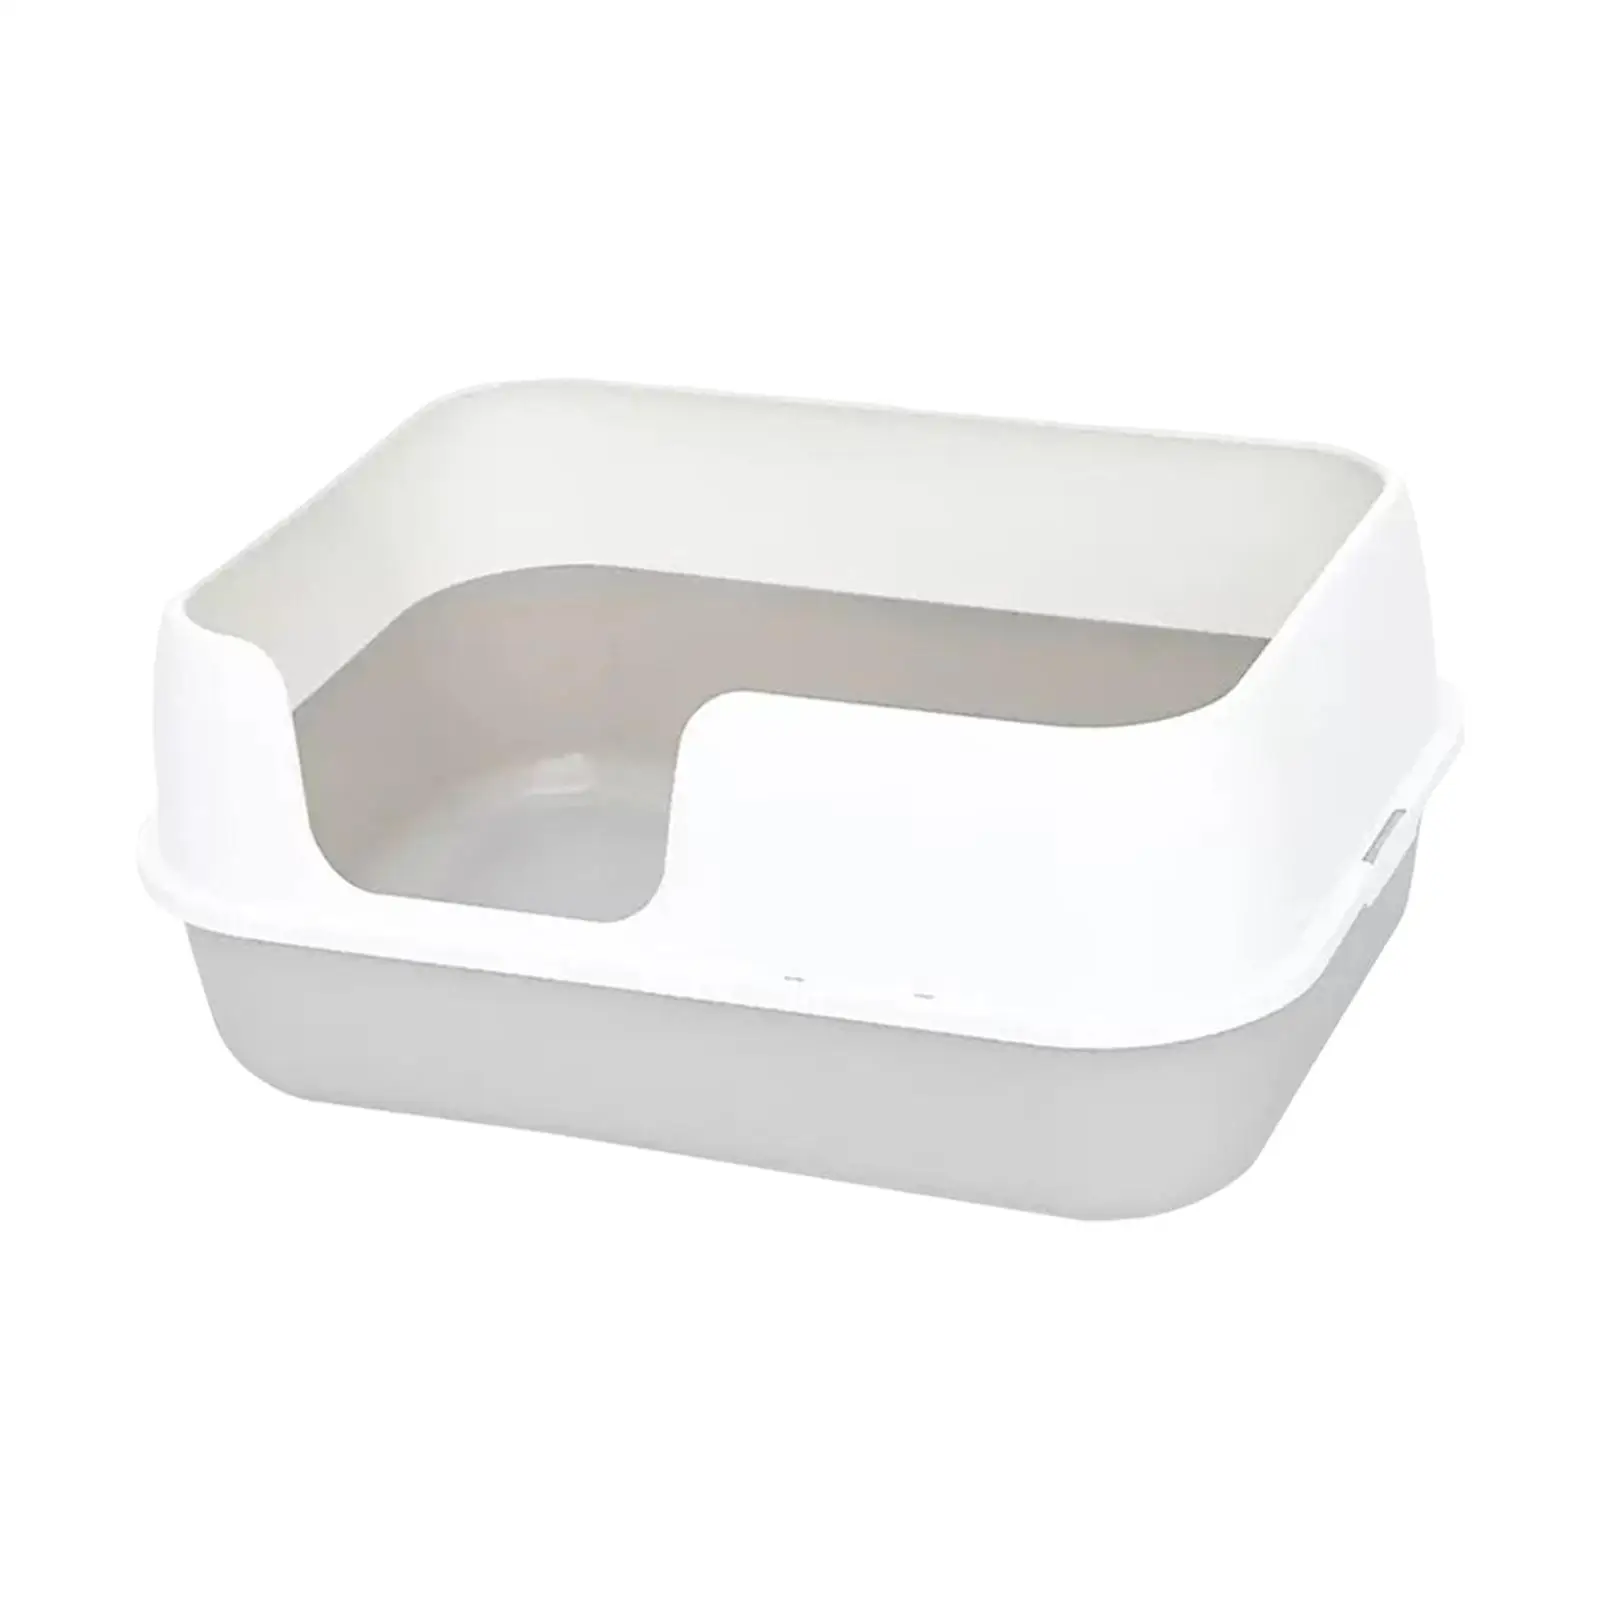 Cat Litter Box Tray Toilet Semi Enclosed Measure 24.4x17.3x10.2inch Portable